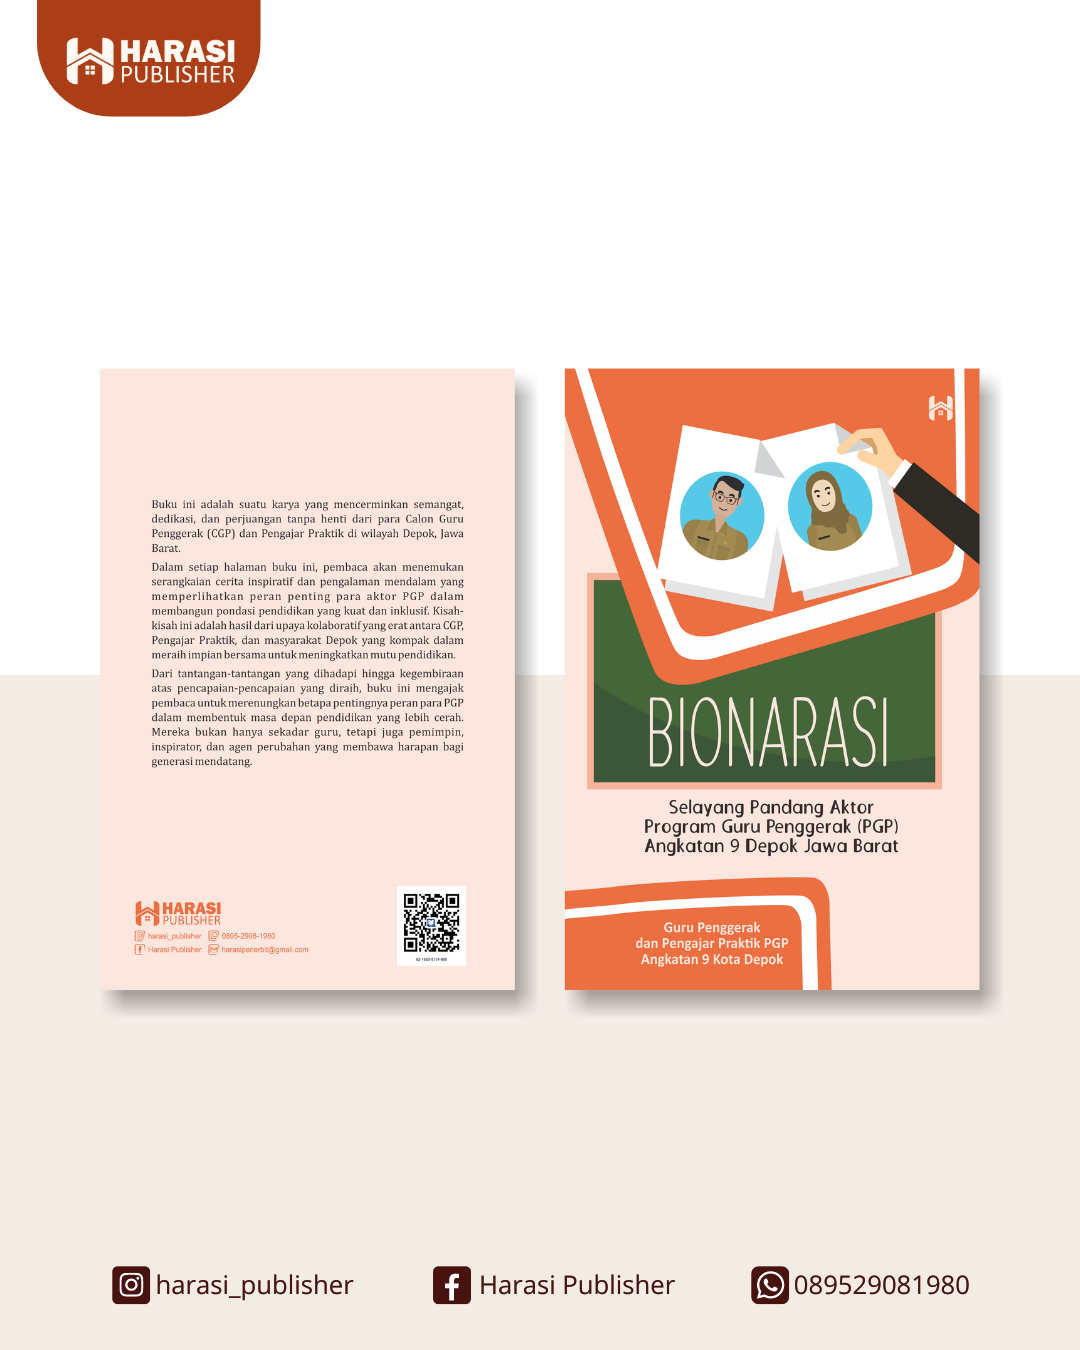 BIONARASI Selayang Pandang Aktor Program Guru Penggerak (PGP) Angkatan 9 Depok Jawa Barat